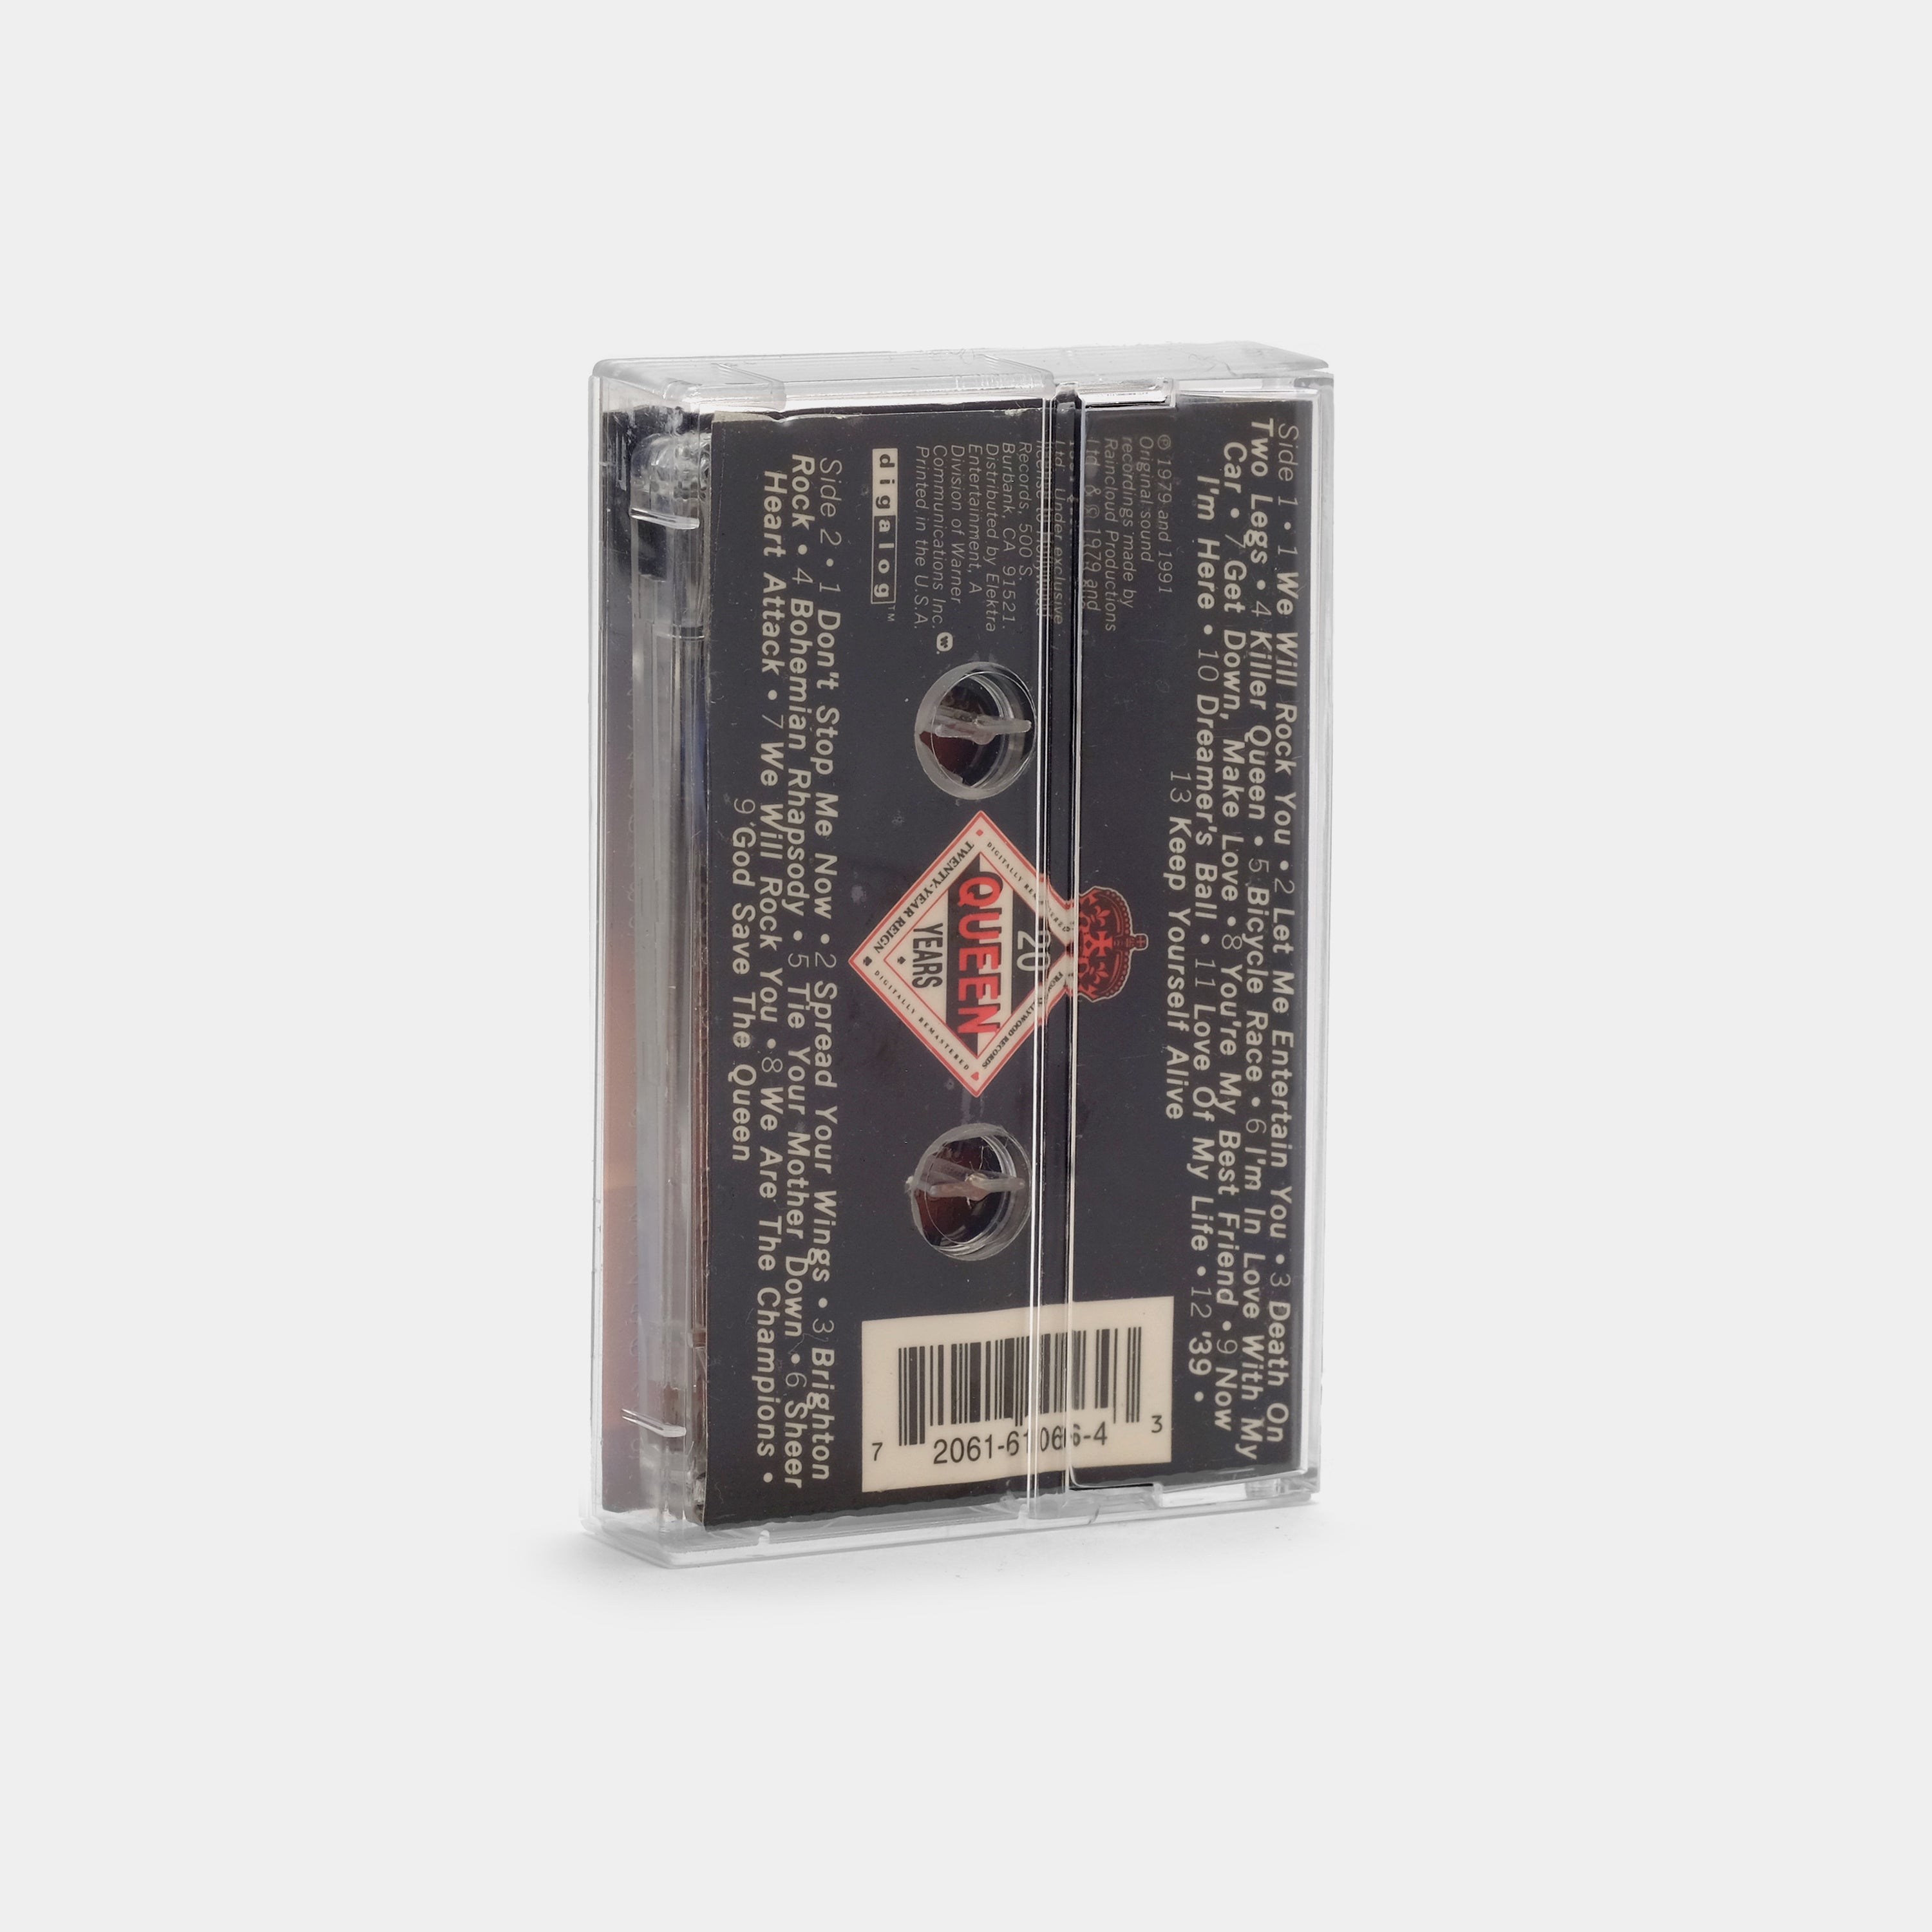 Queen - Live Killers Cassette Tape